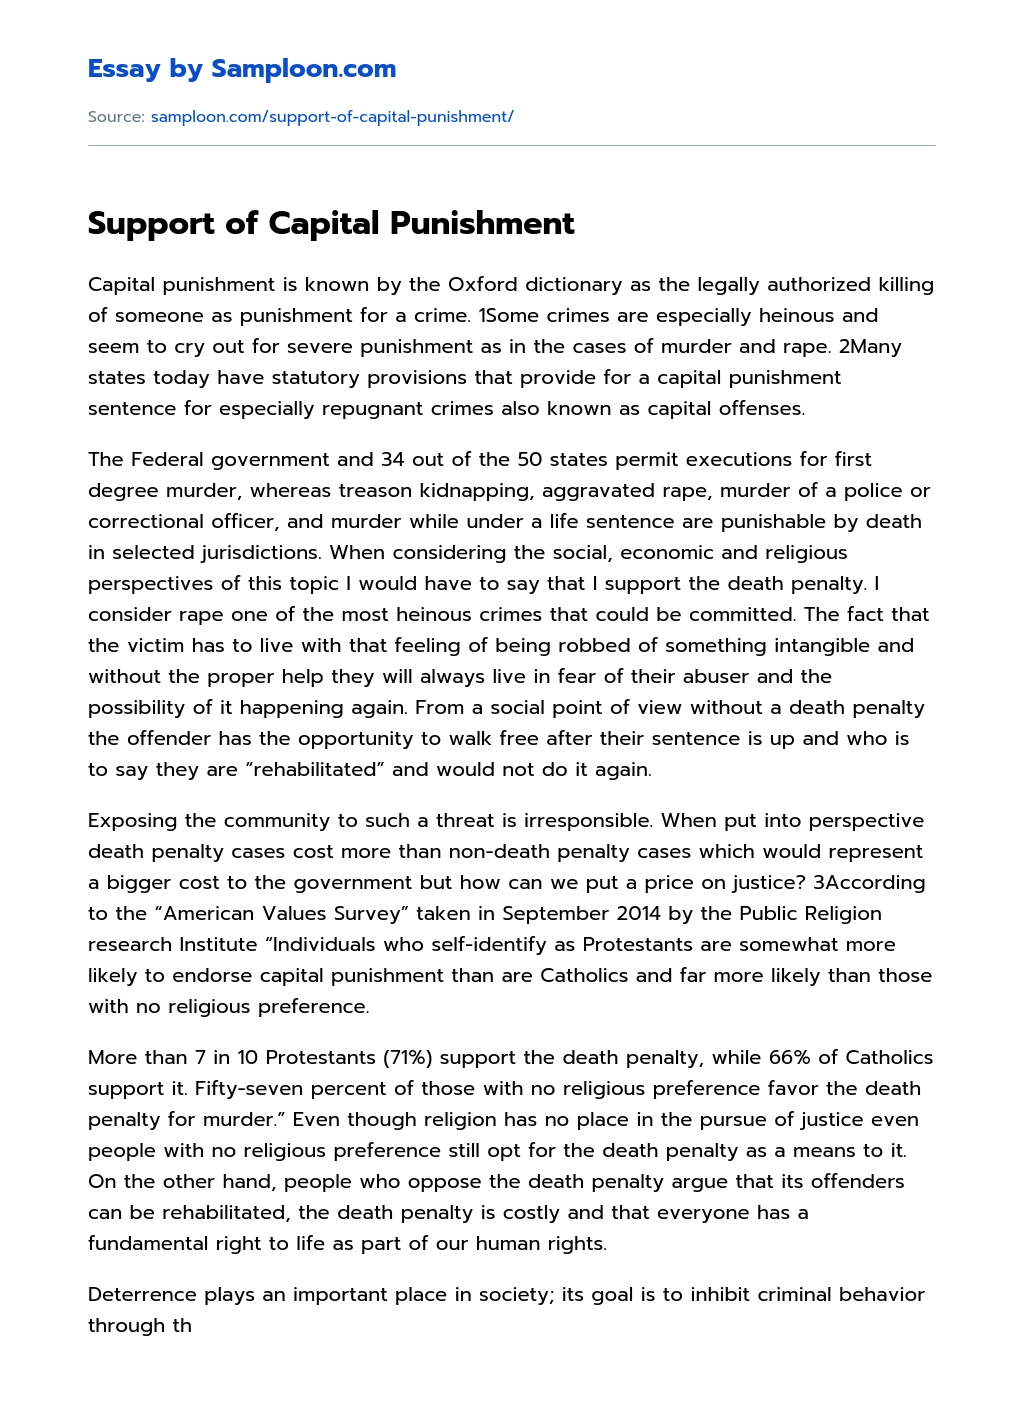 Support of Capital Punishment essay